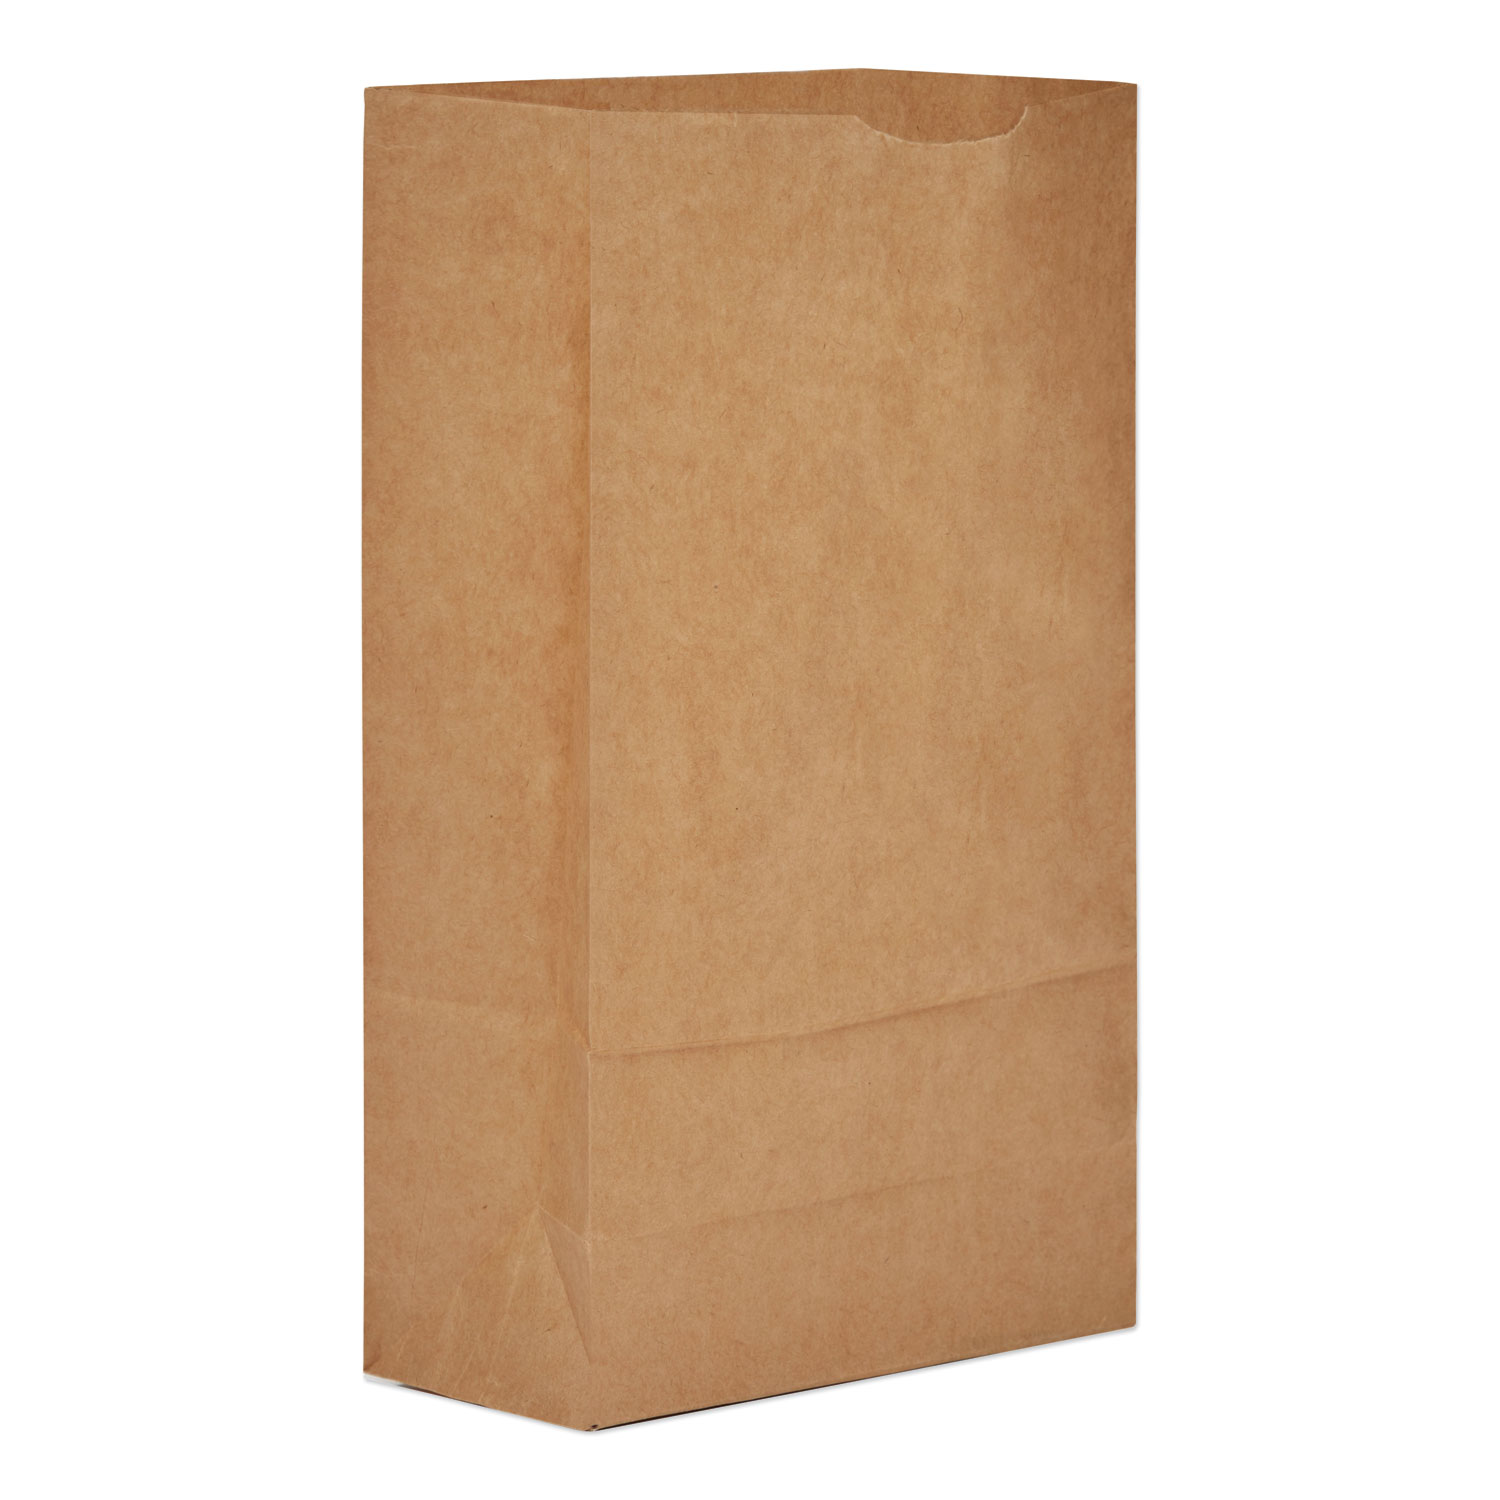  General GK6 Grocery Paper Bags, 35 lbs Capacity, #6, 6w x 3.63d x 11.06h, Kraft, 2,000 Bags (BAGGK6) 